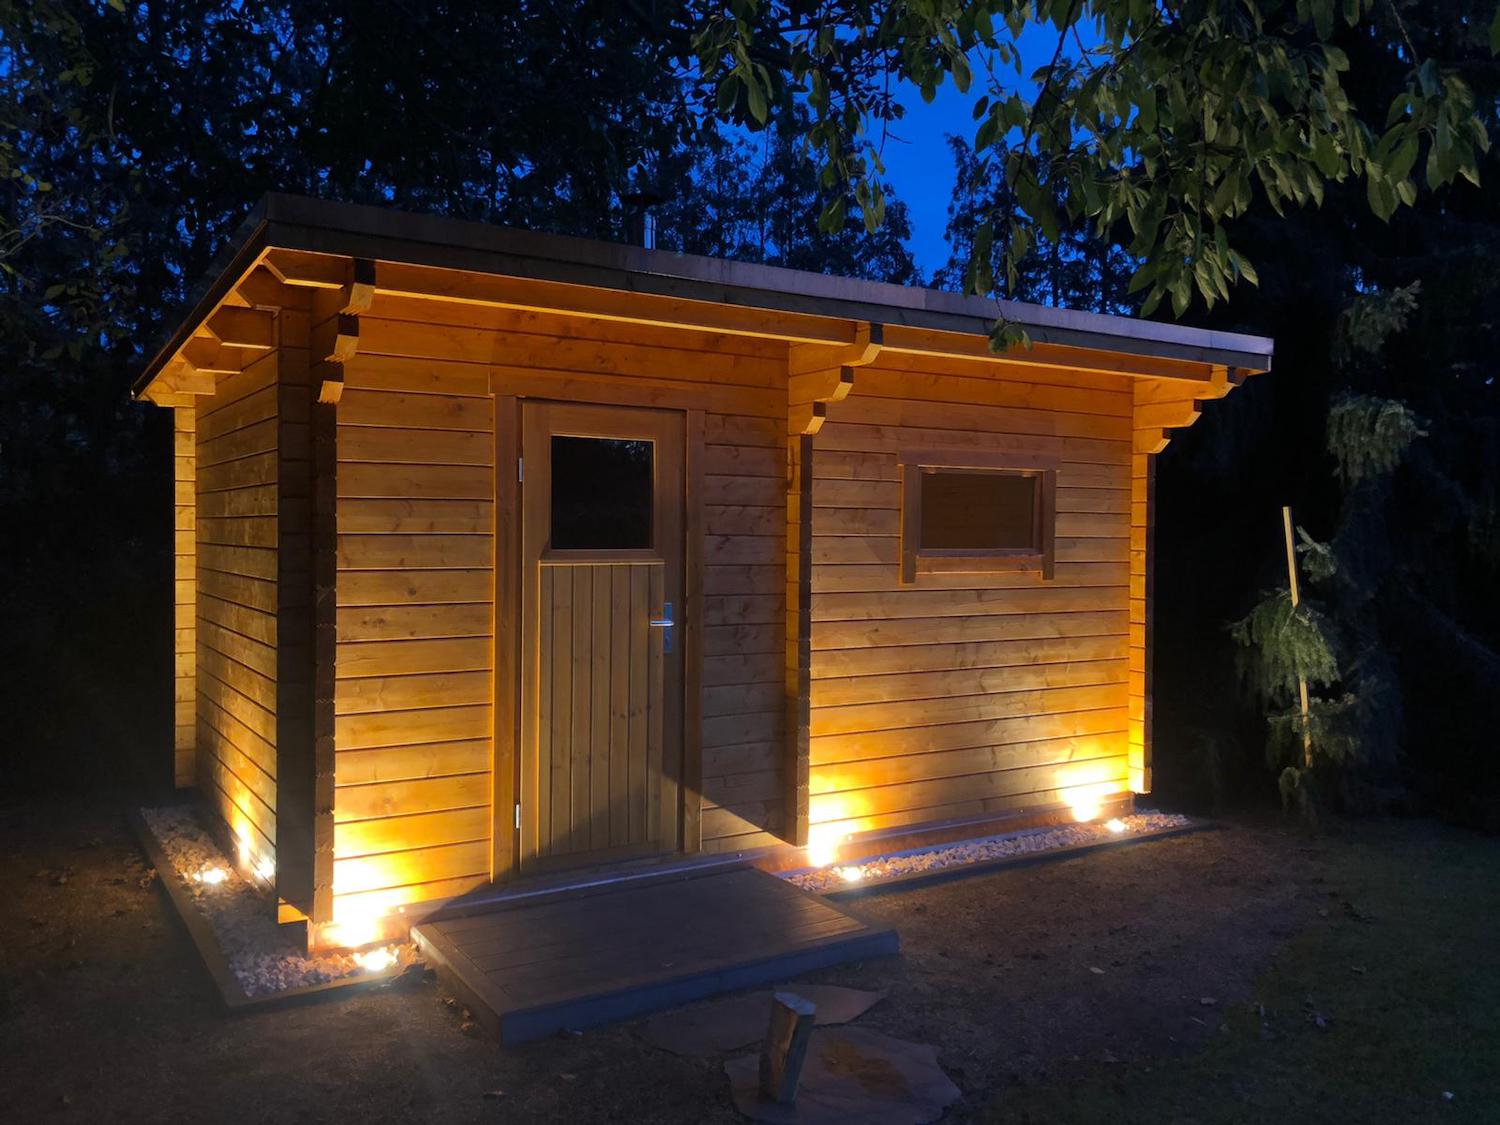 Cubus-Sauna mit Beleuchtung nachts